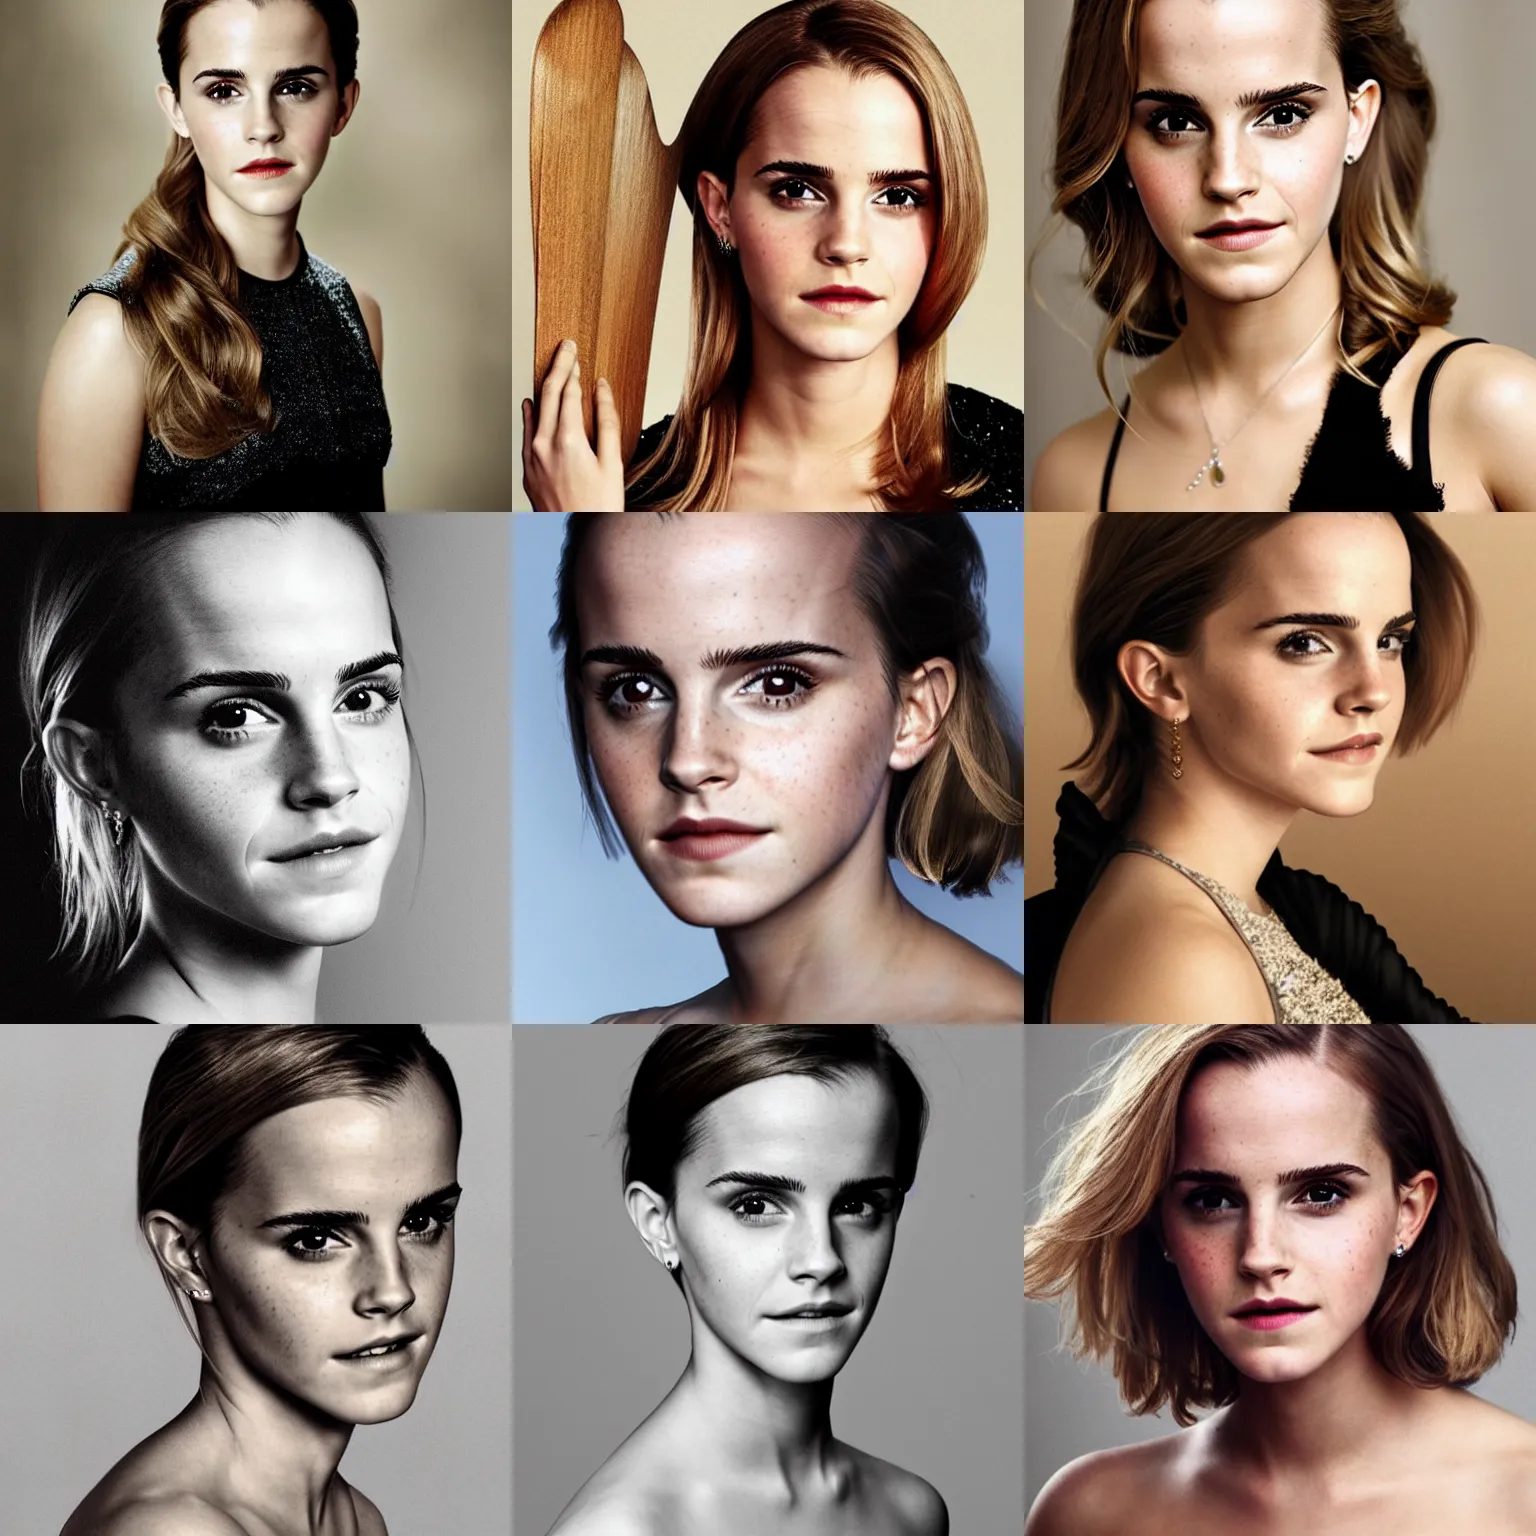 Prompt: portrait of Emma Watson as Natalie Portman